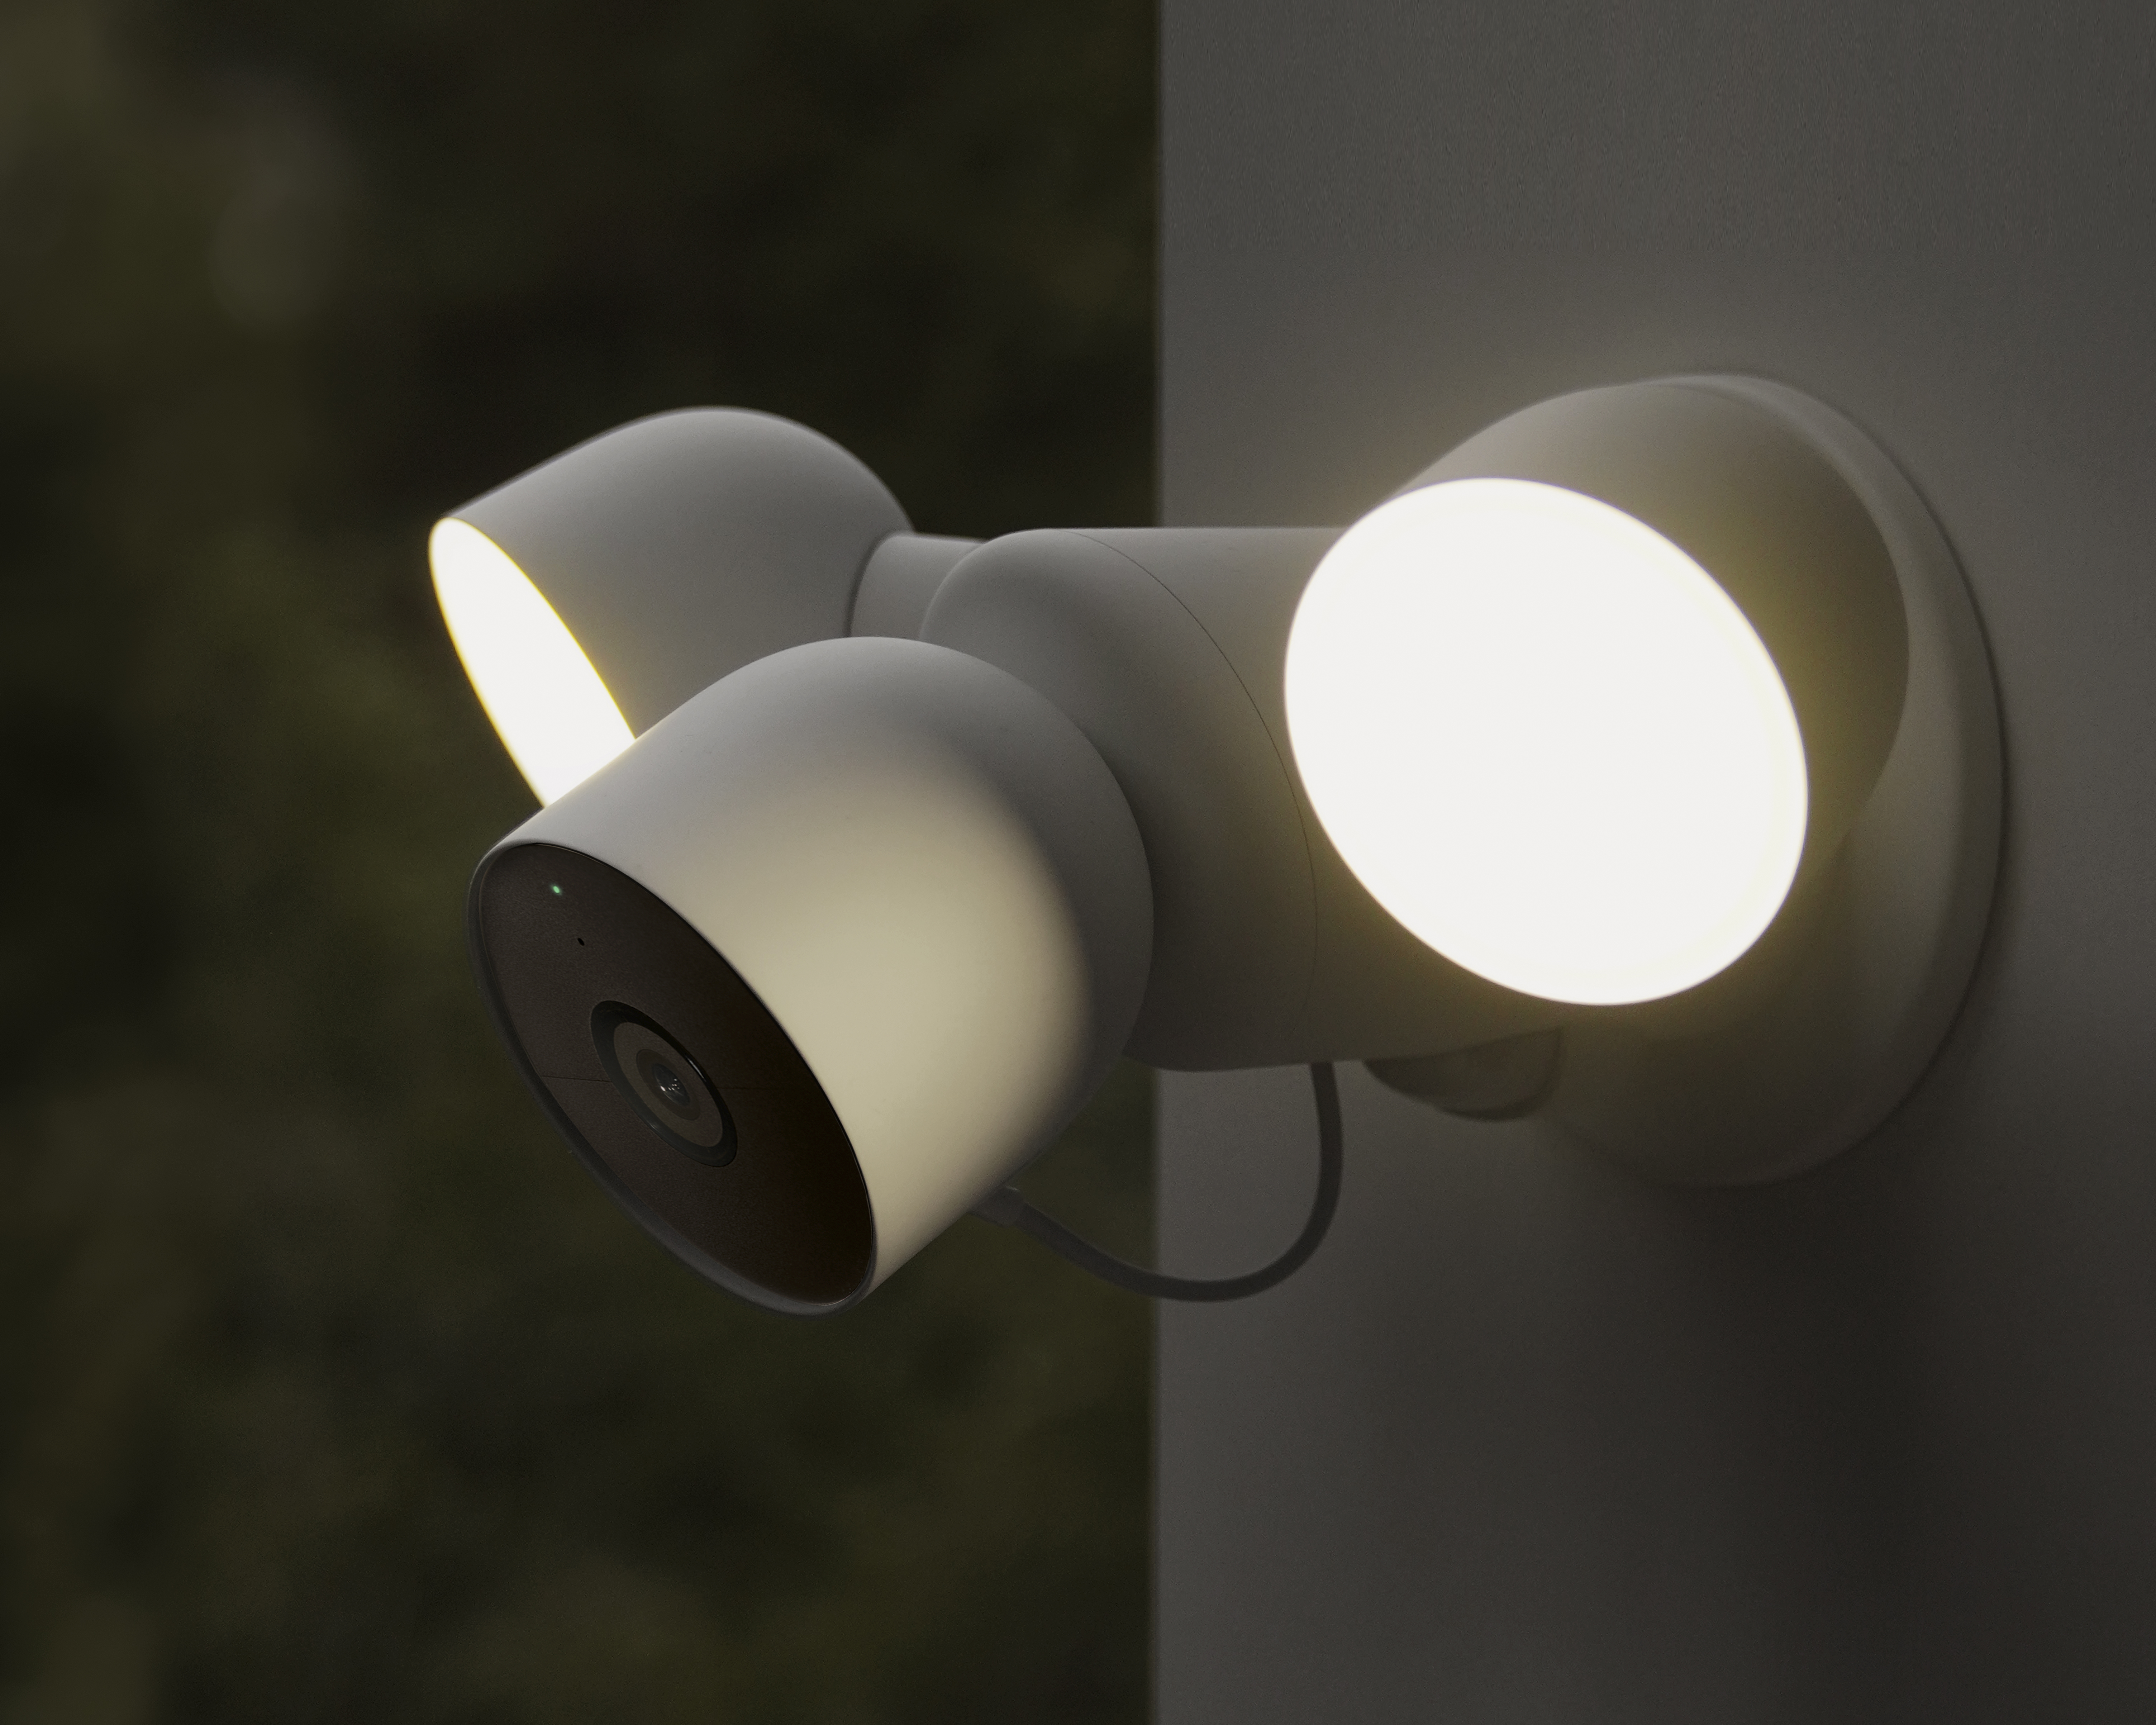 Google's Nest Cams and Doorbell get a refresh | TechCrunch